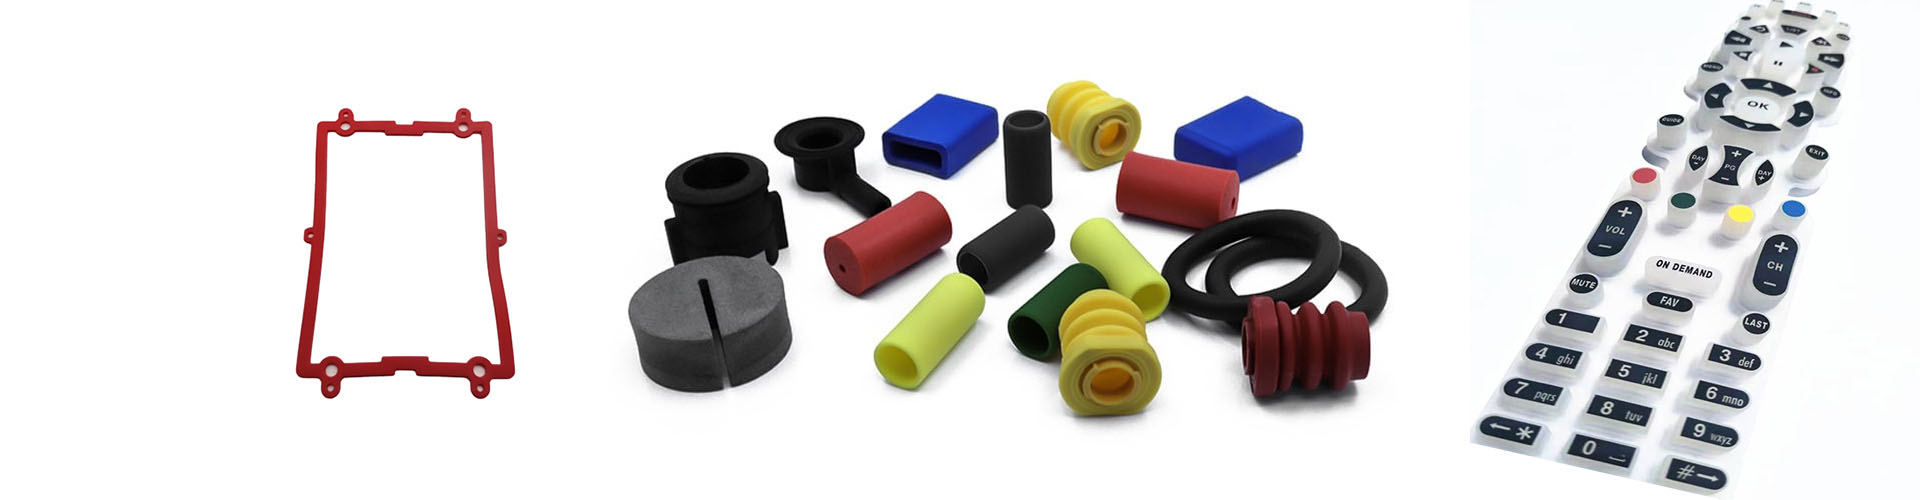 Silicone rubber parts or accessories